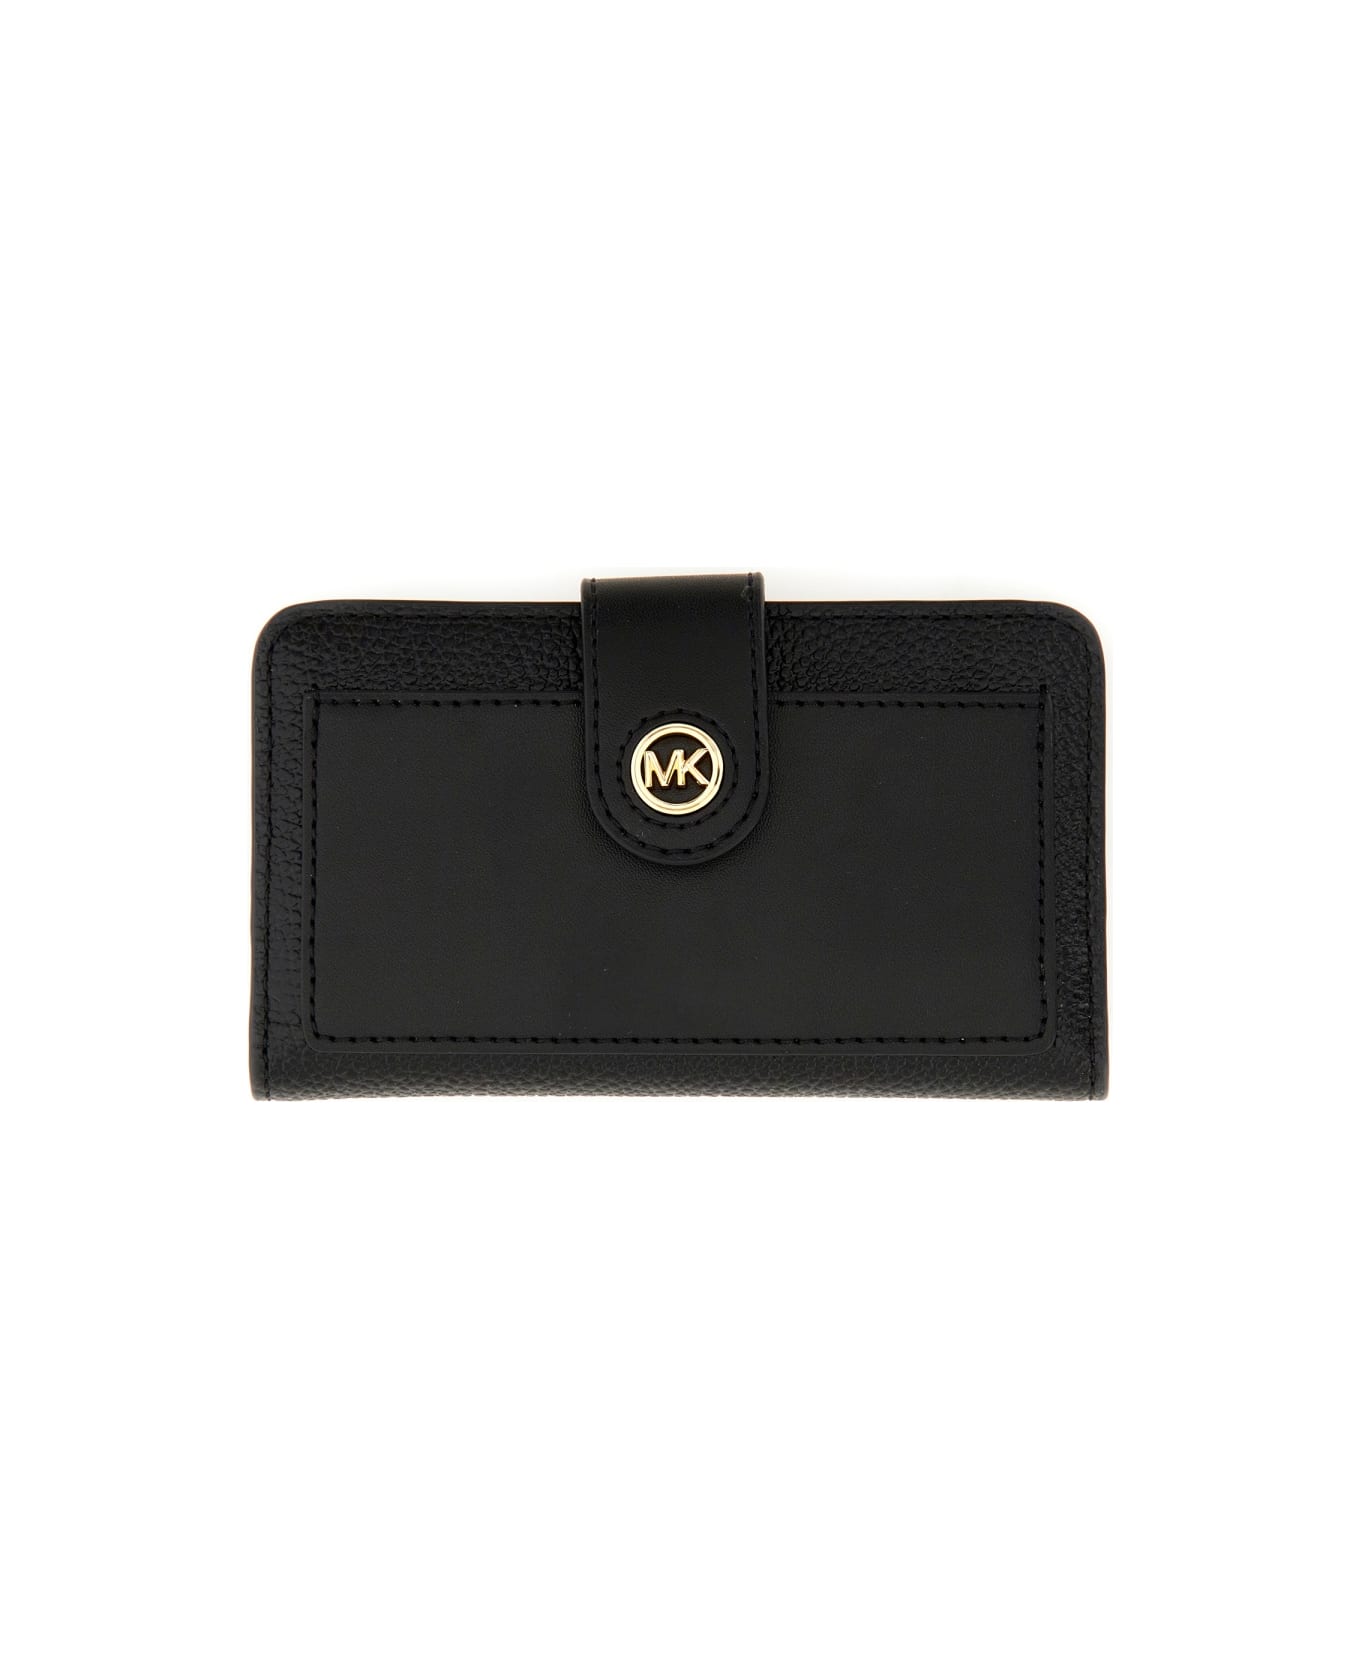 Michael Kors Wallet With Logo - Black 財布